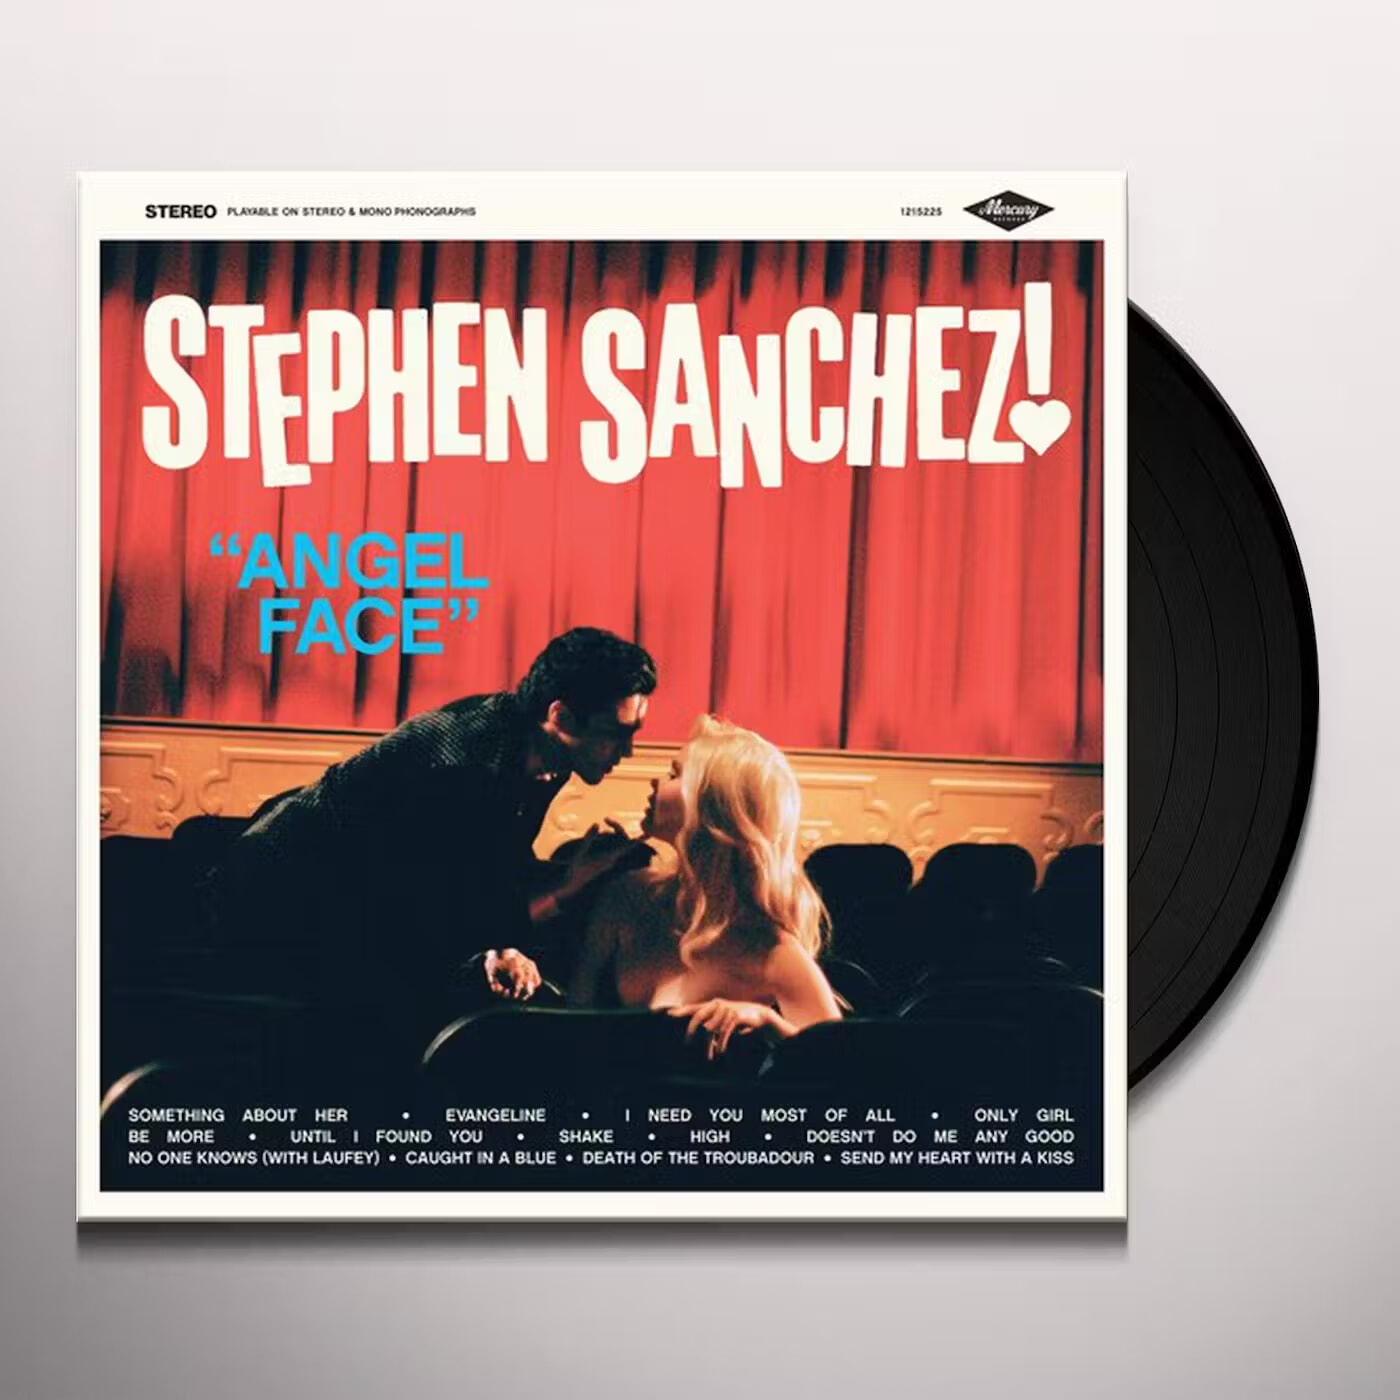 Stephen Sanchez (스티븐 산체스) - 1집 Angel Face [LP]